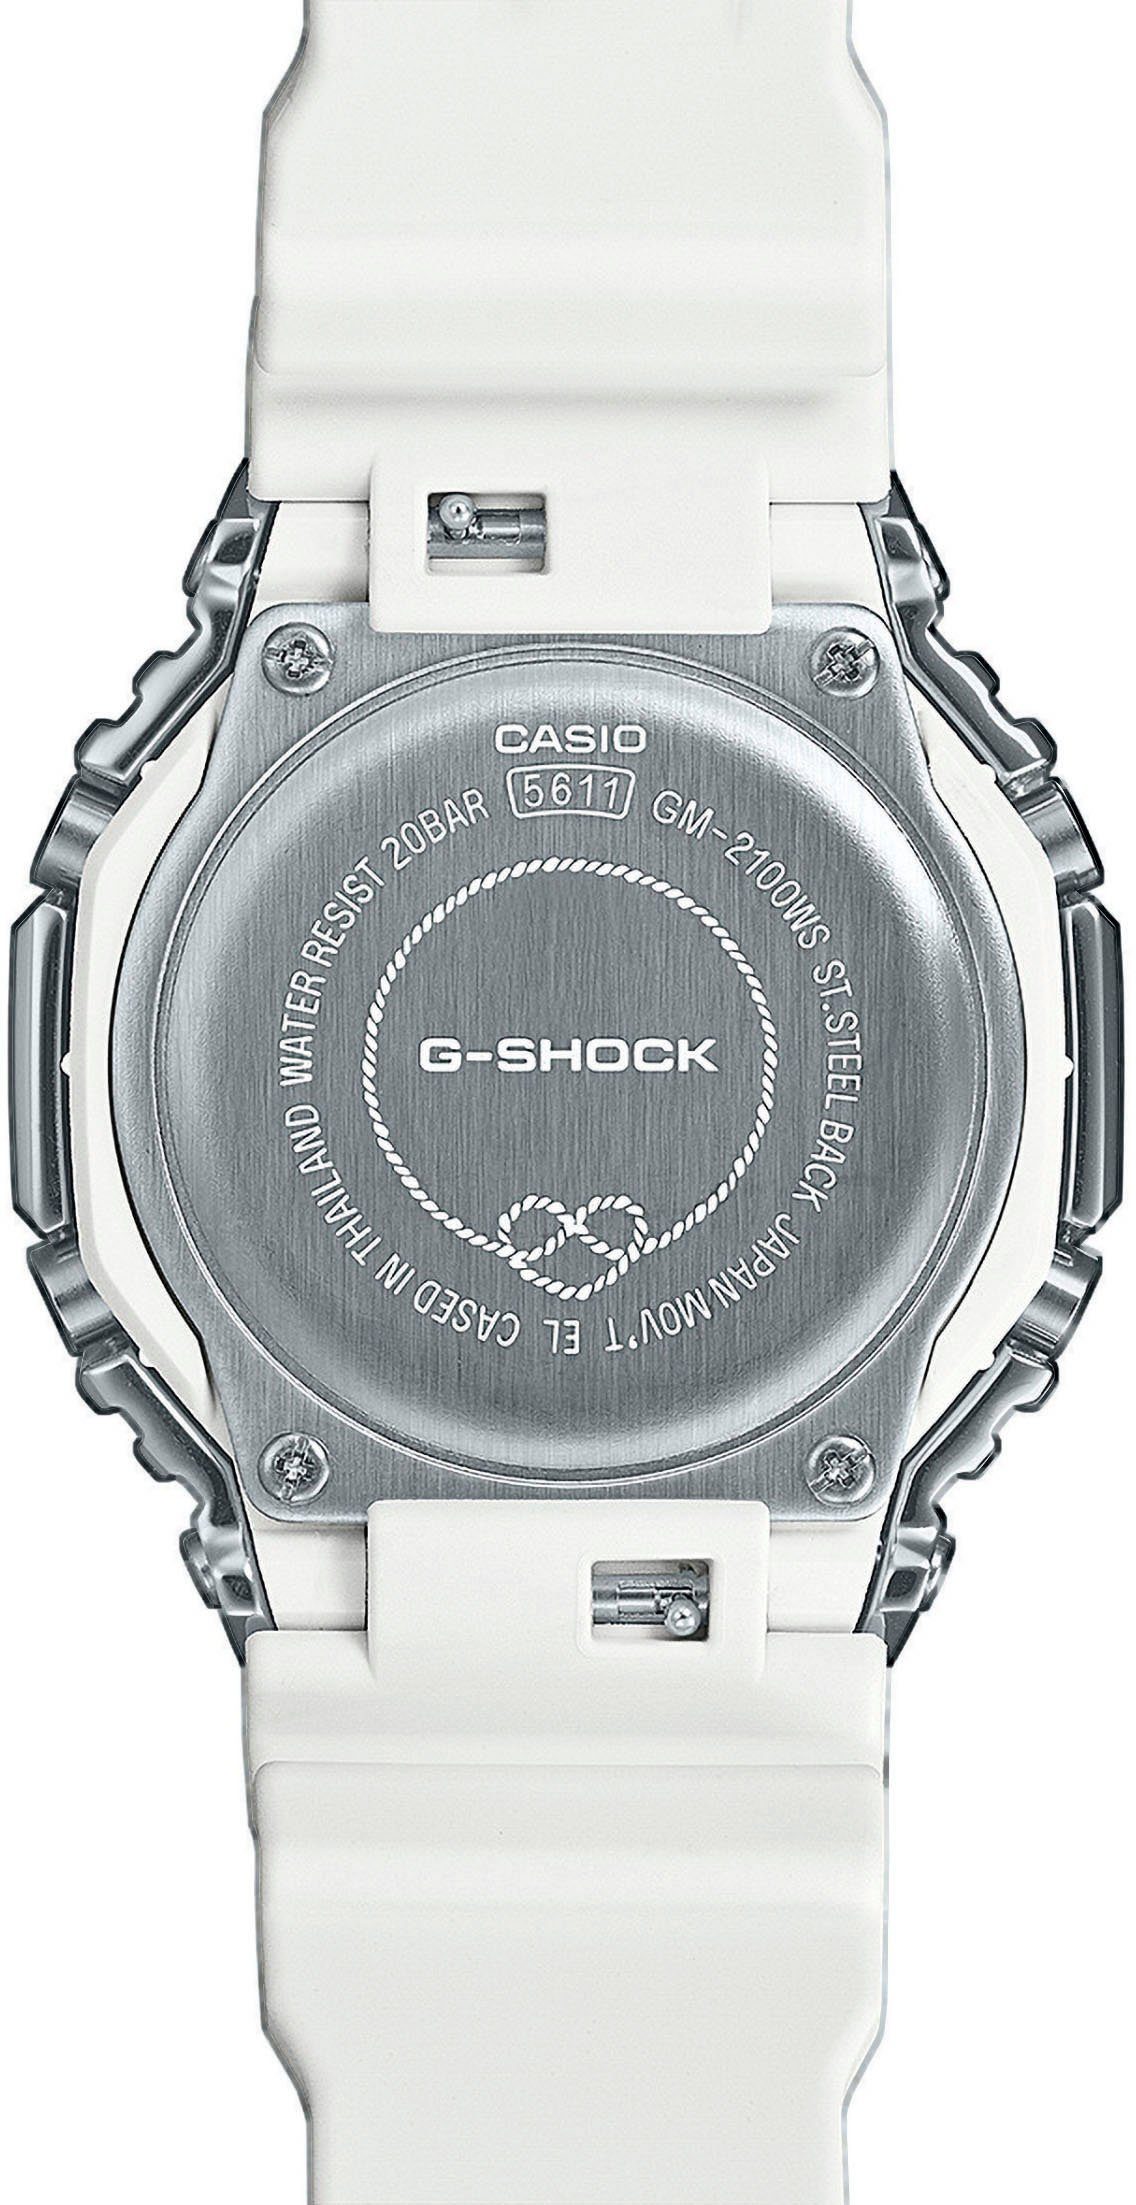 Chronograph GM-2100WS-7AER G-SHOCK CASIO